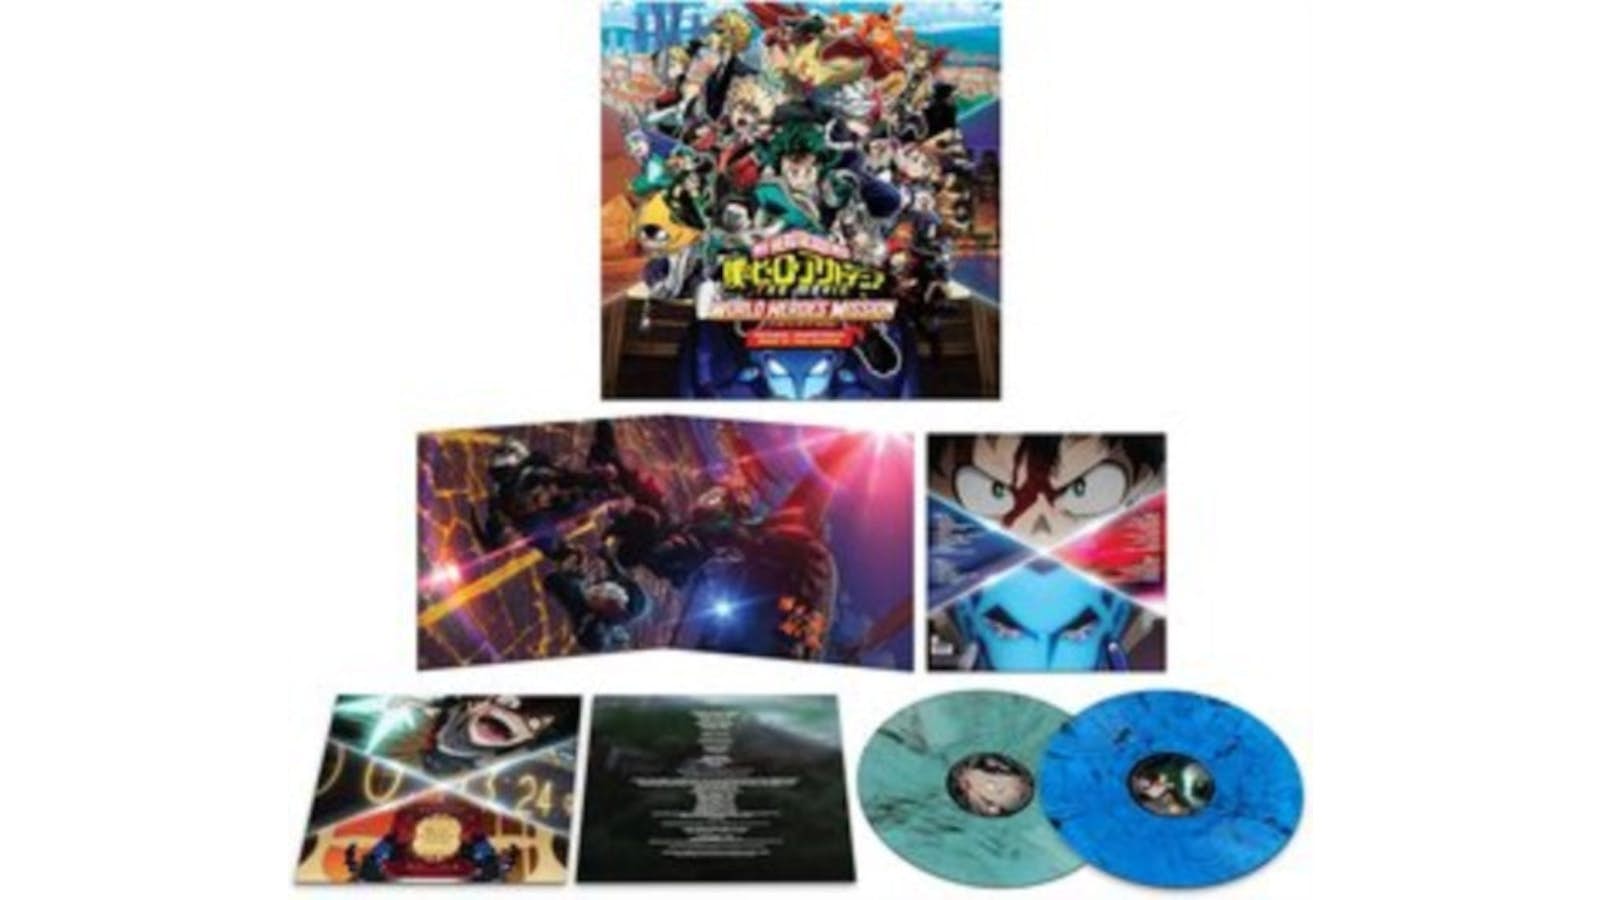 My Hero Academia: World Heroes' Mission - Original Soundtrack LP Vinyl